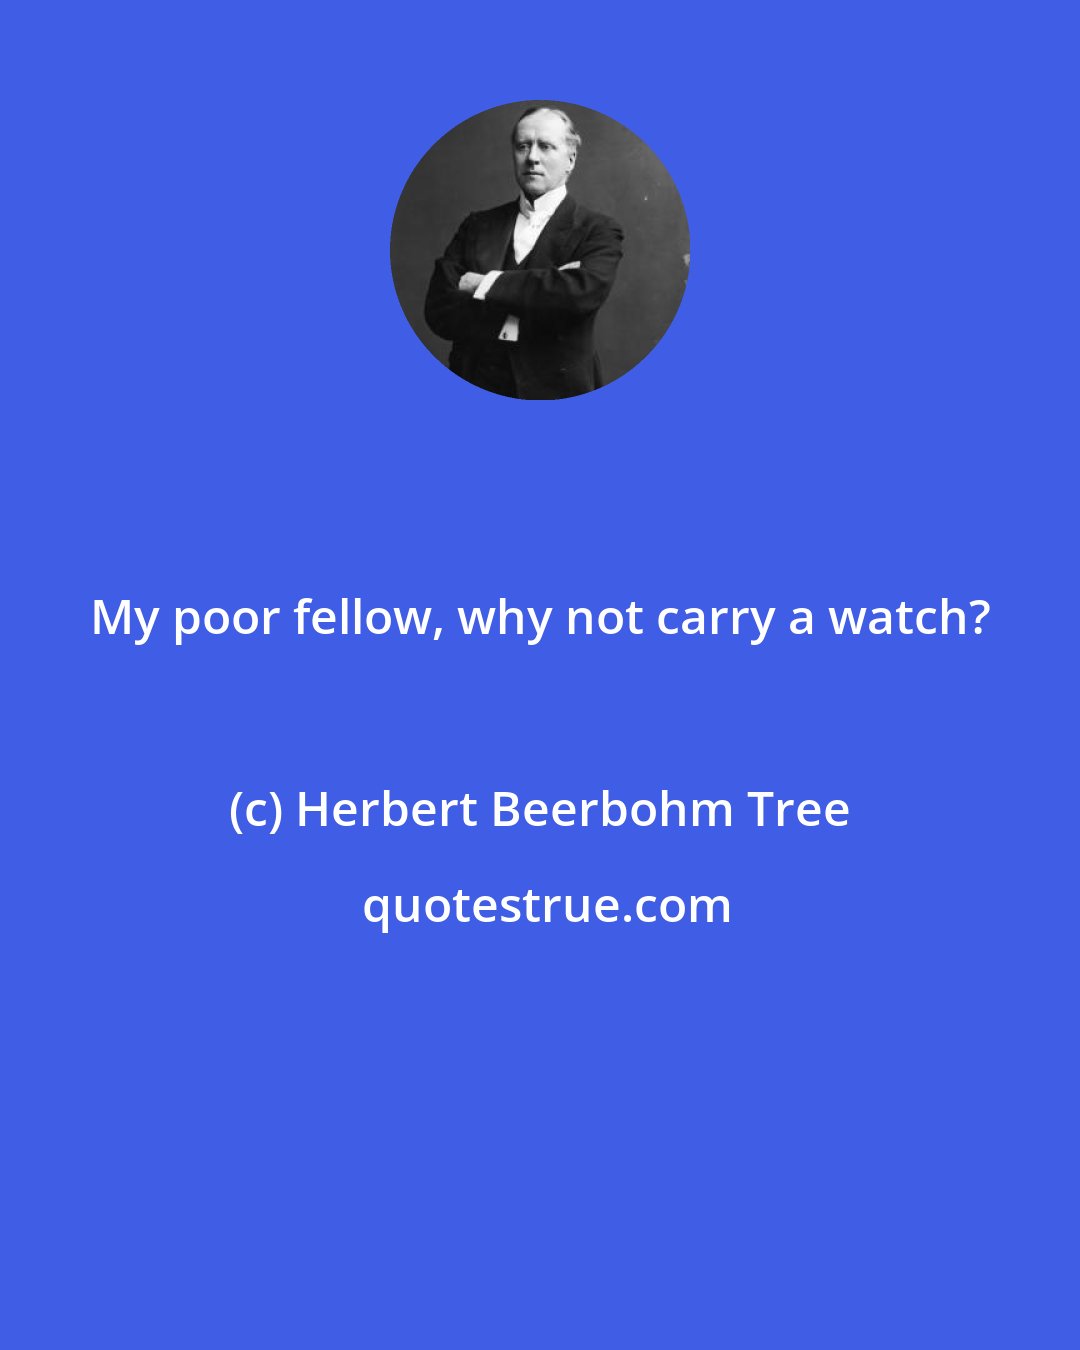 Herbert Beerbohm Tree: My poor fellow, why not carry a watch?